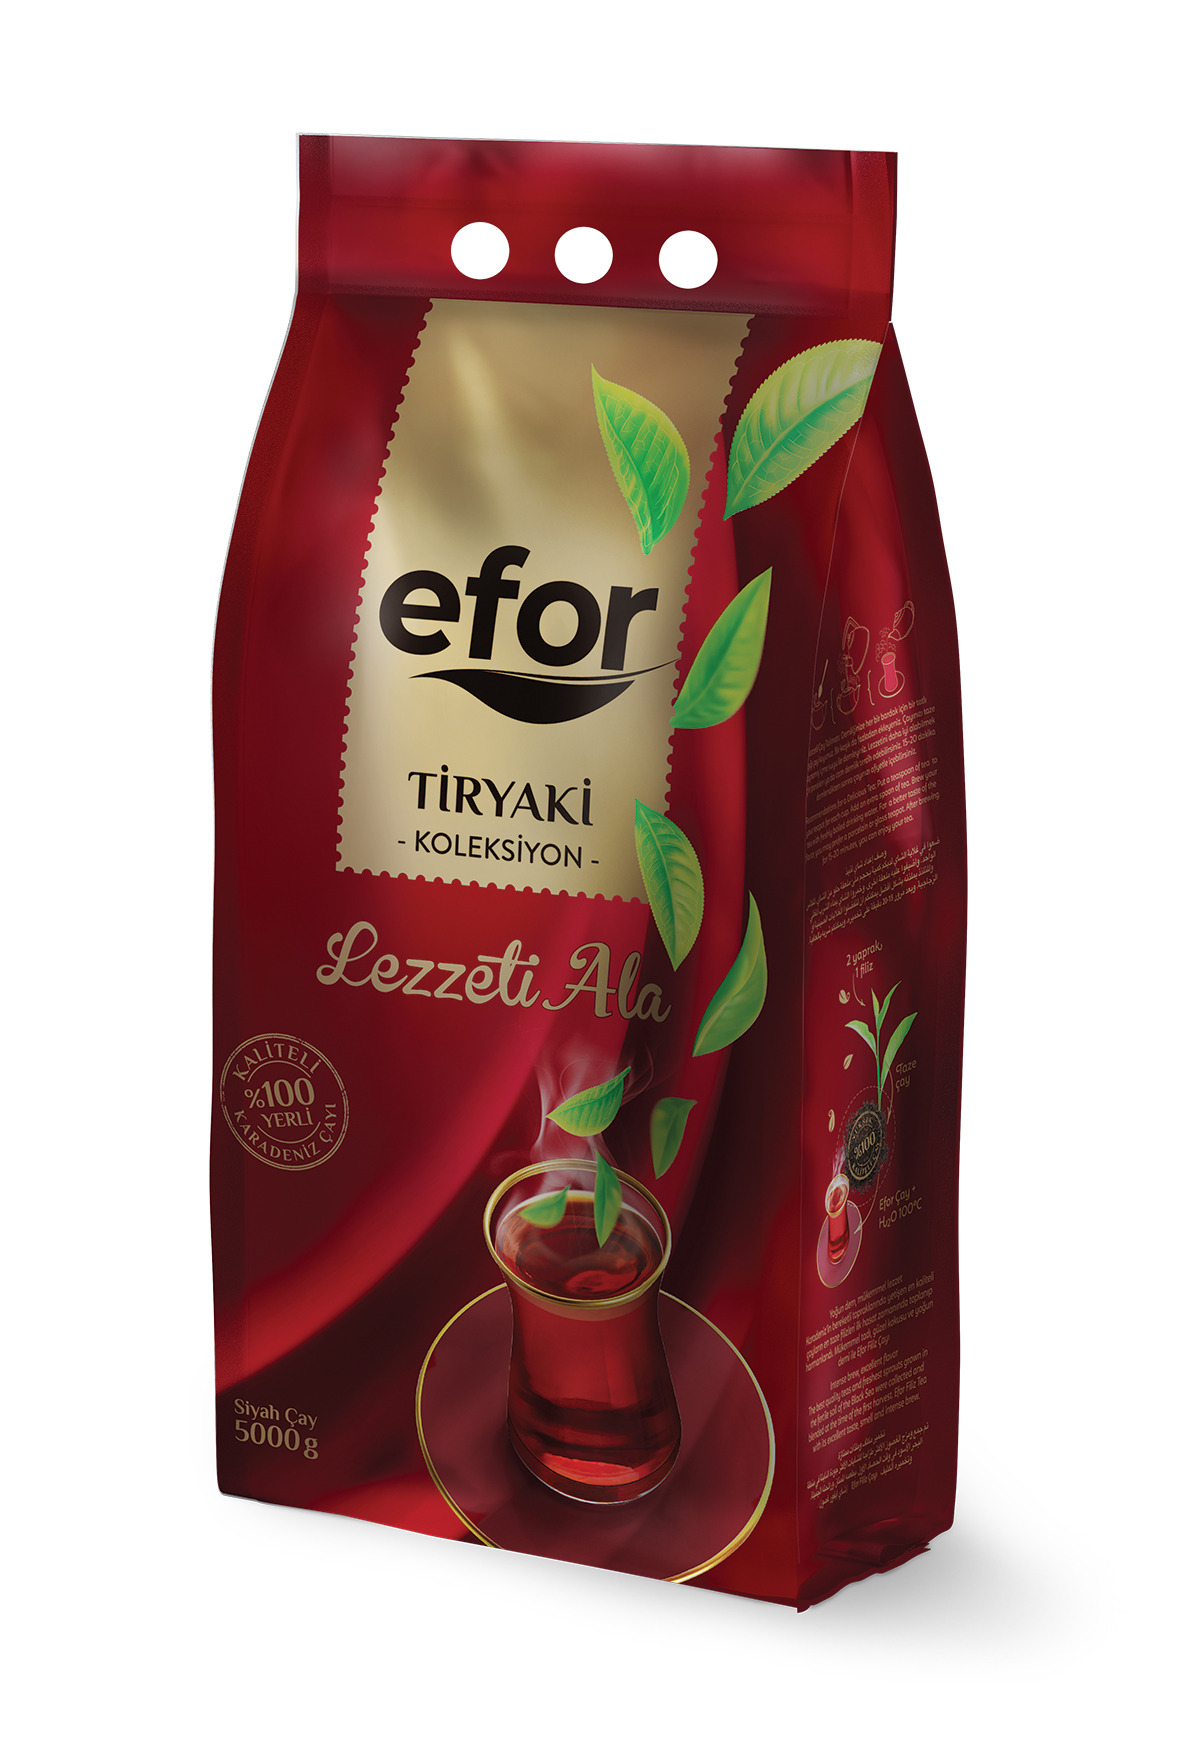 Efor Tiryaki Perfect Taste Tea 5000g